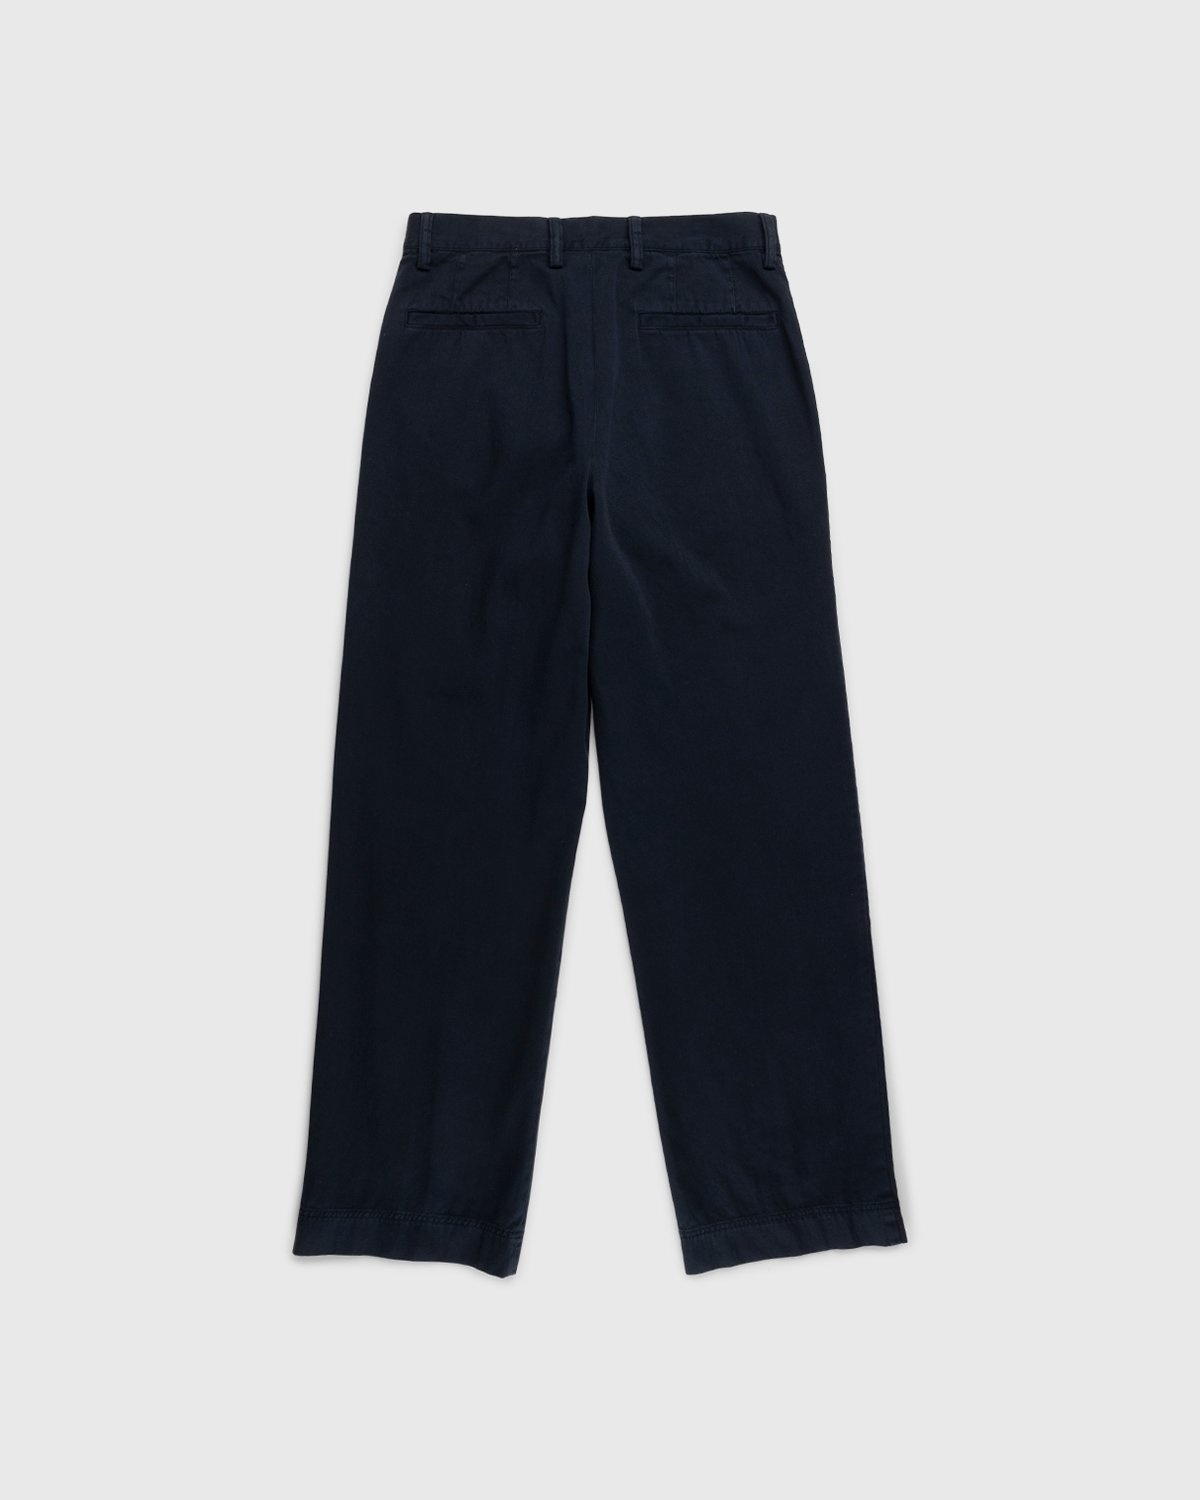 Dries van Noten – Pilson Pants Navy - Pants - Blue - Image 2